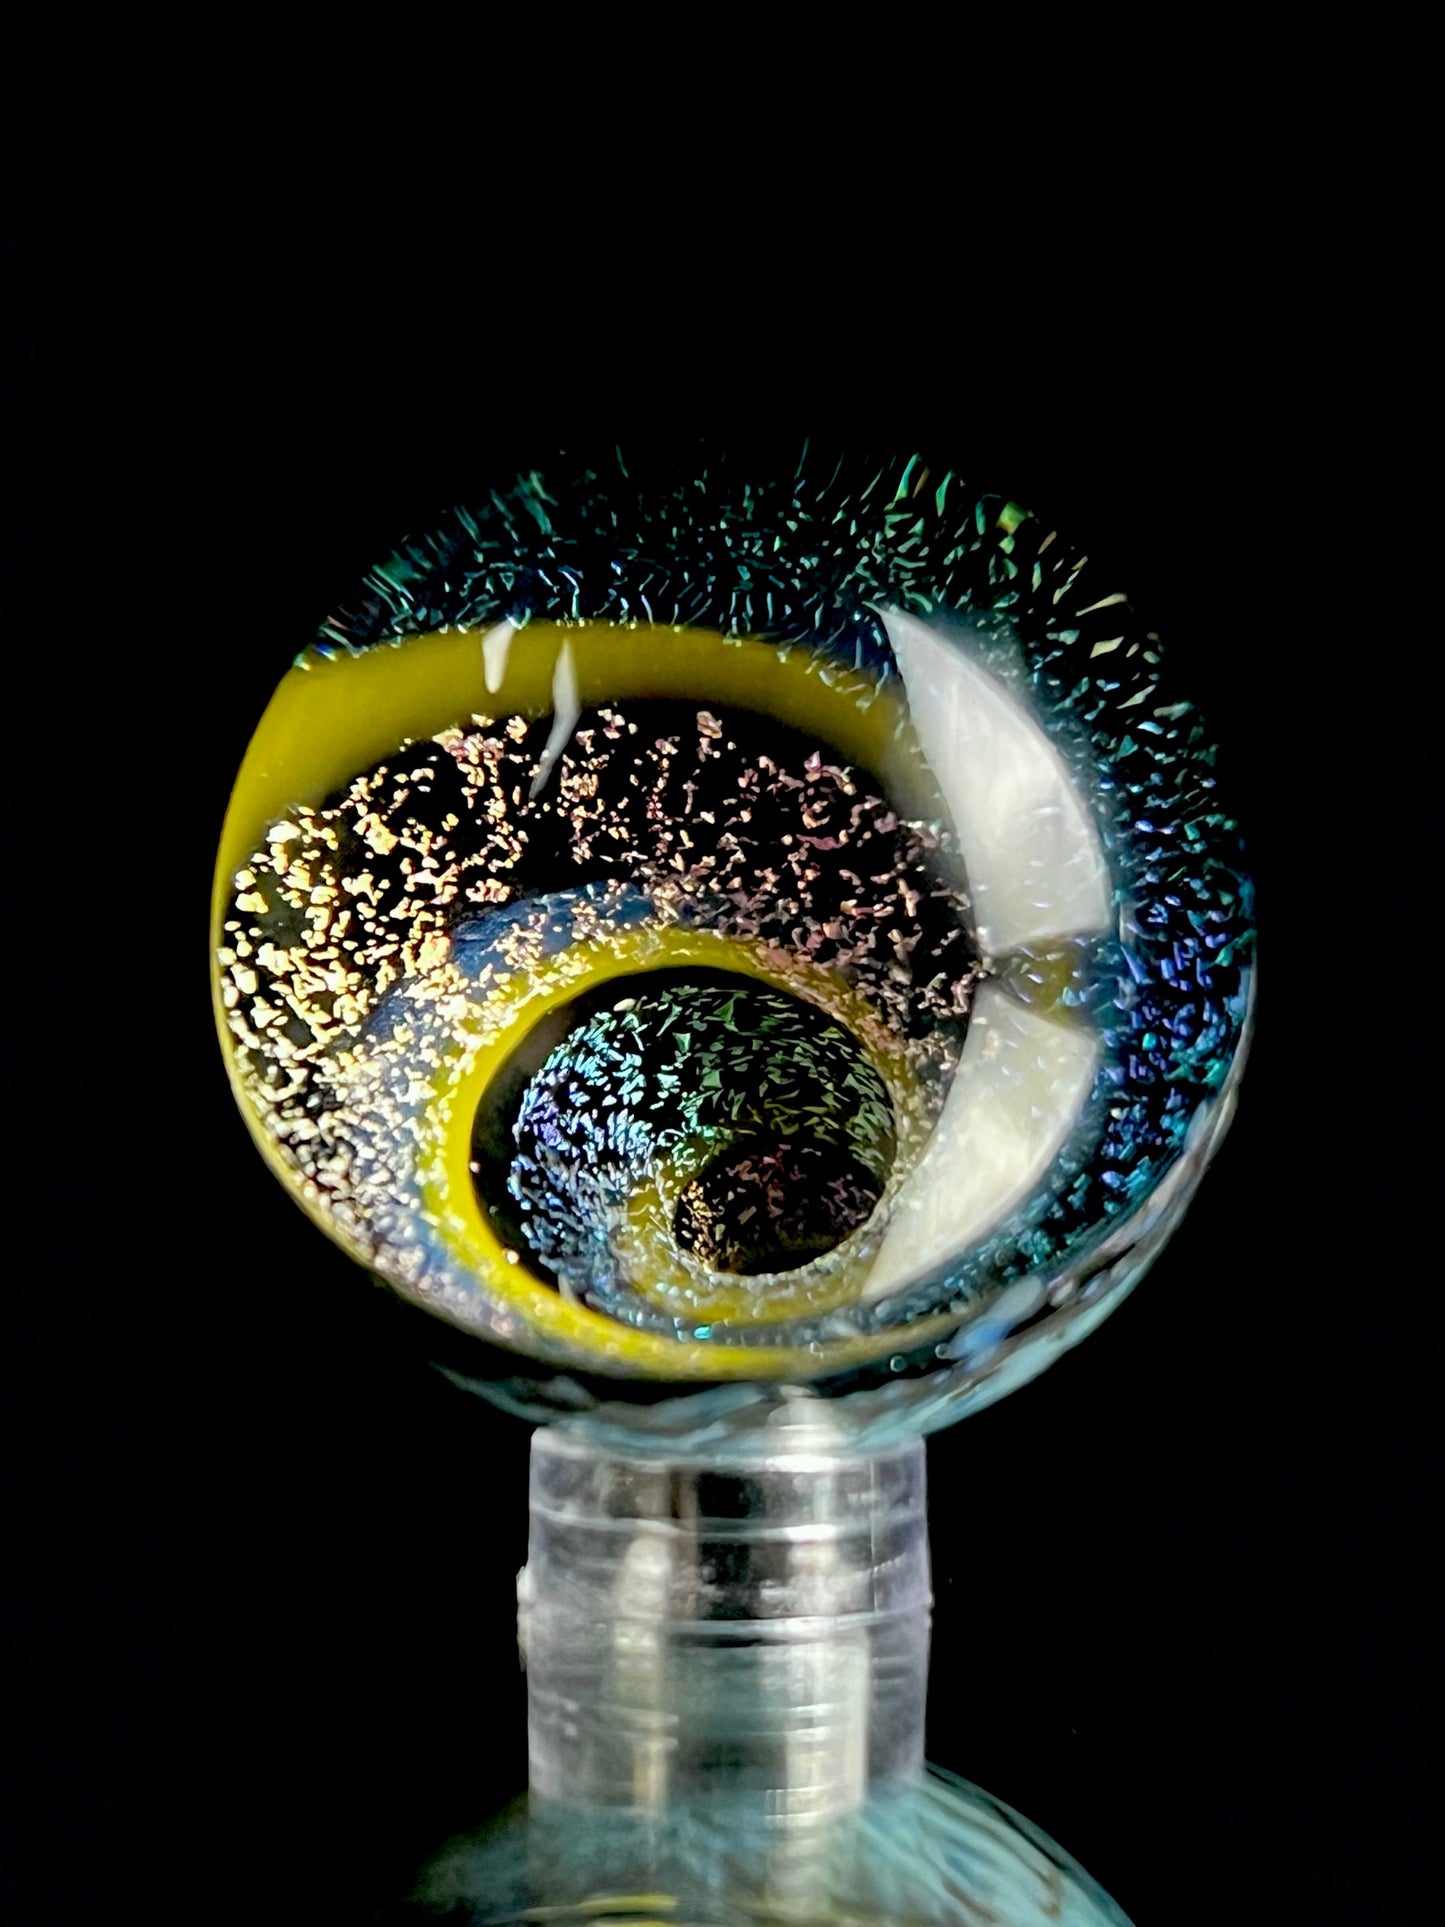 Dichro vortex marble by Subtl